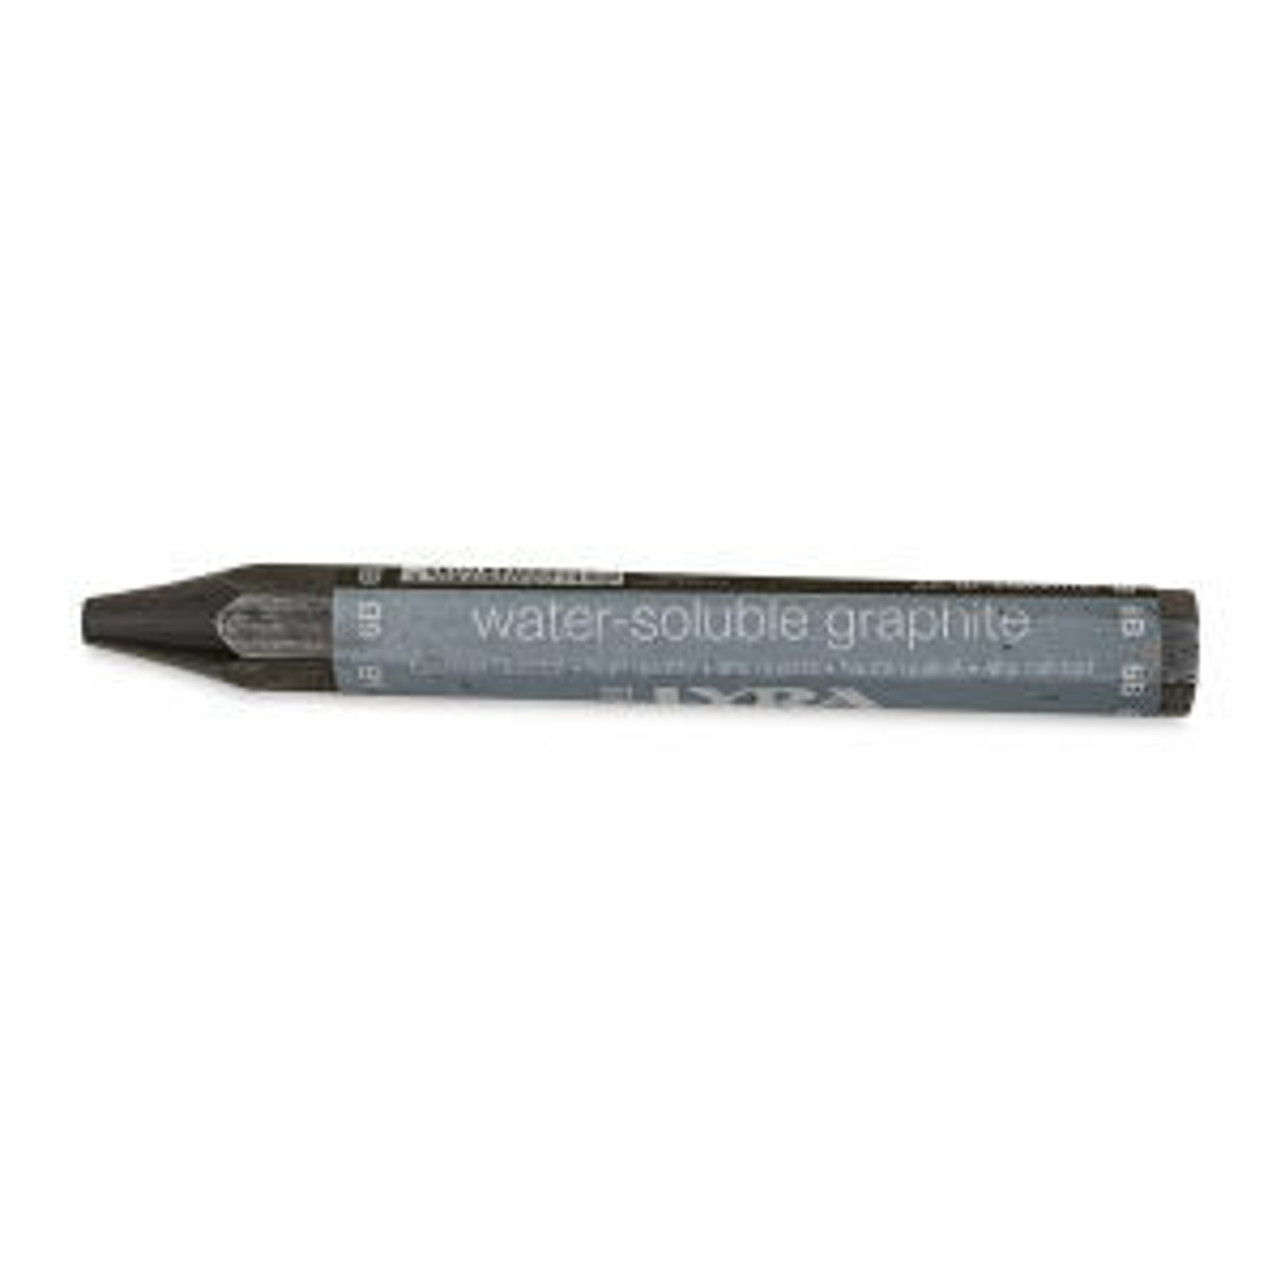 Crayon graphite Lyra / Crayon bois (non soluble dans l’eau)